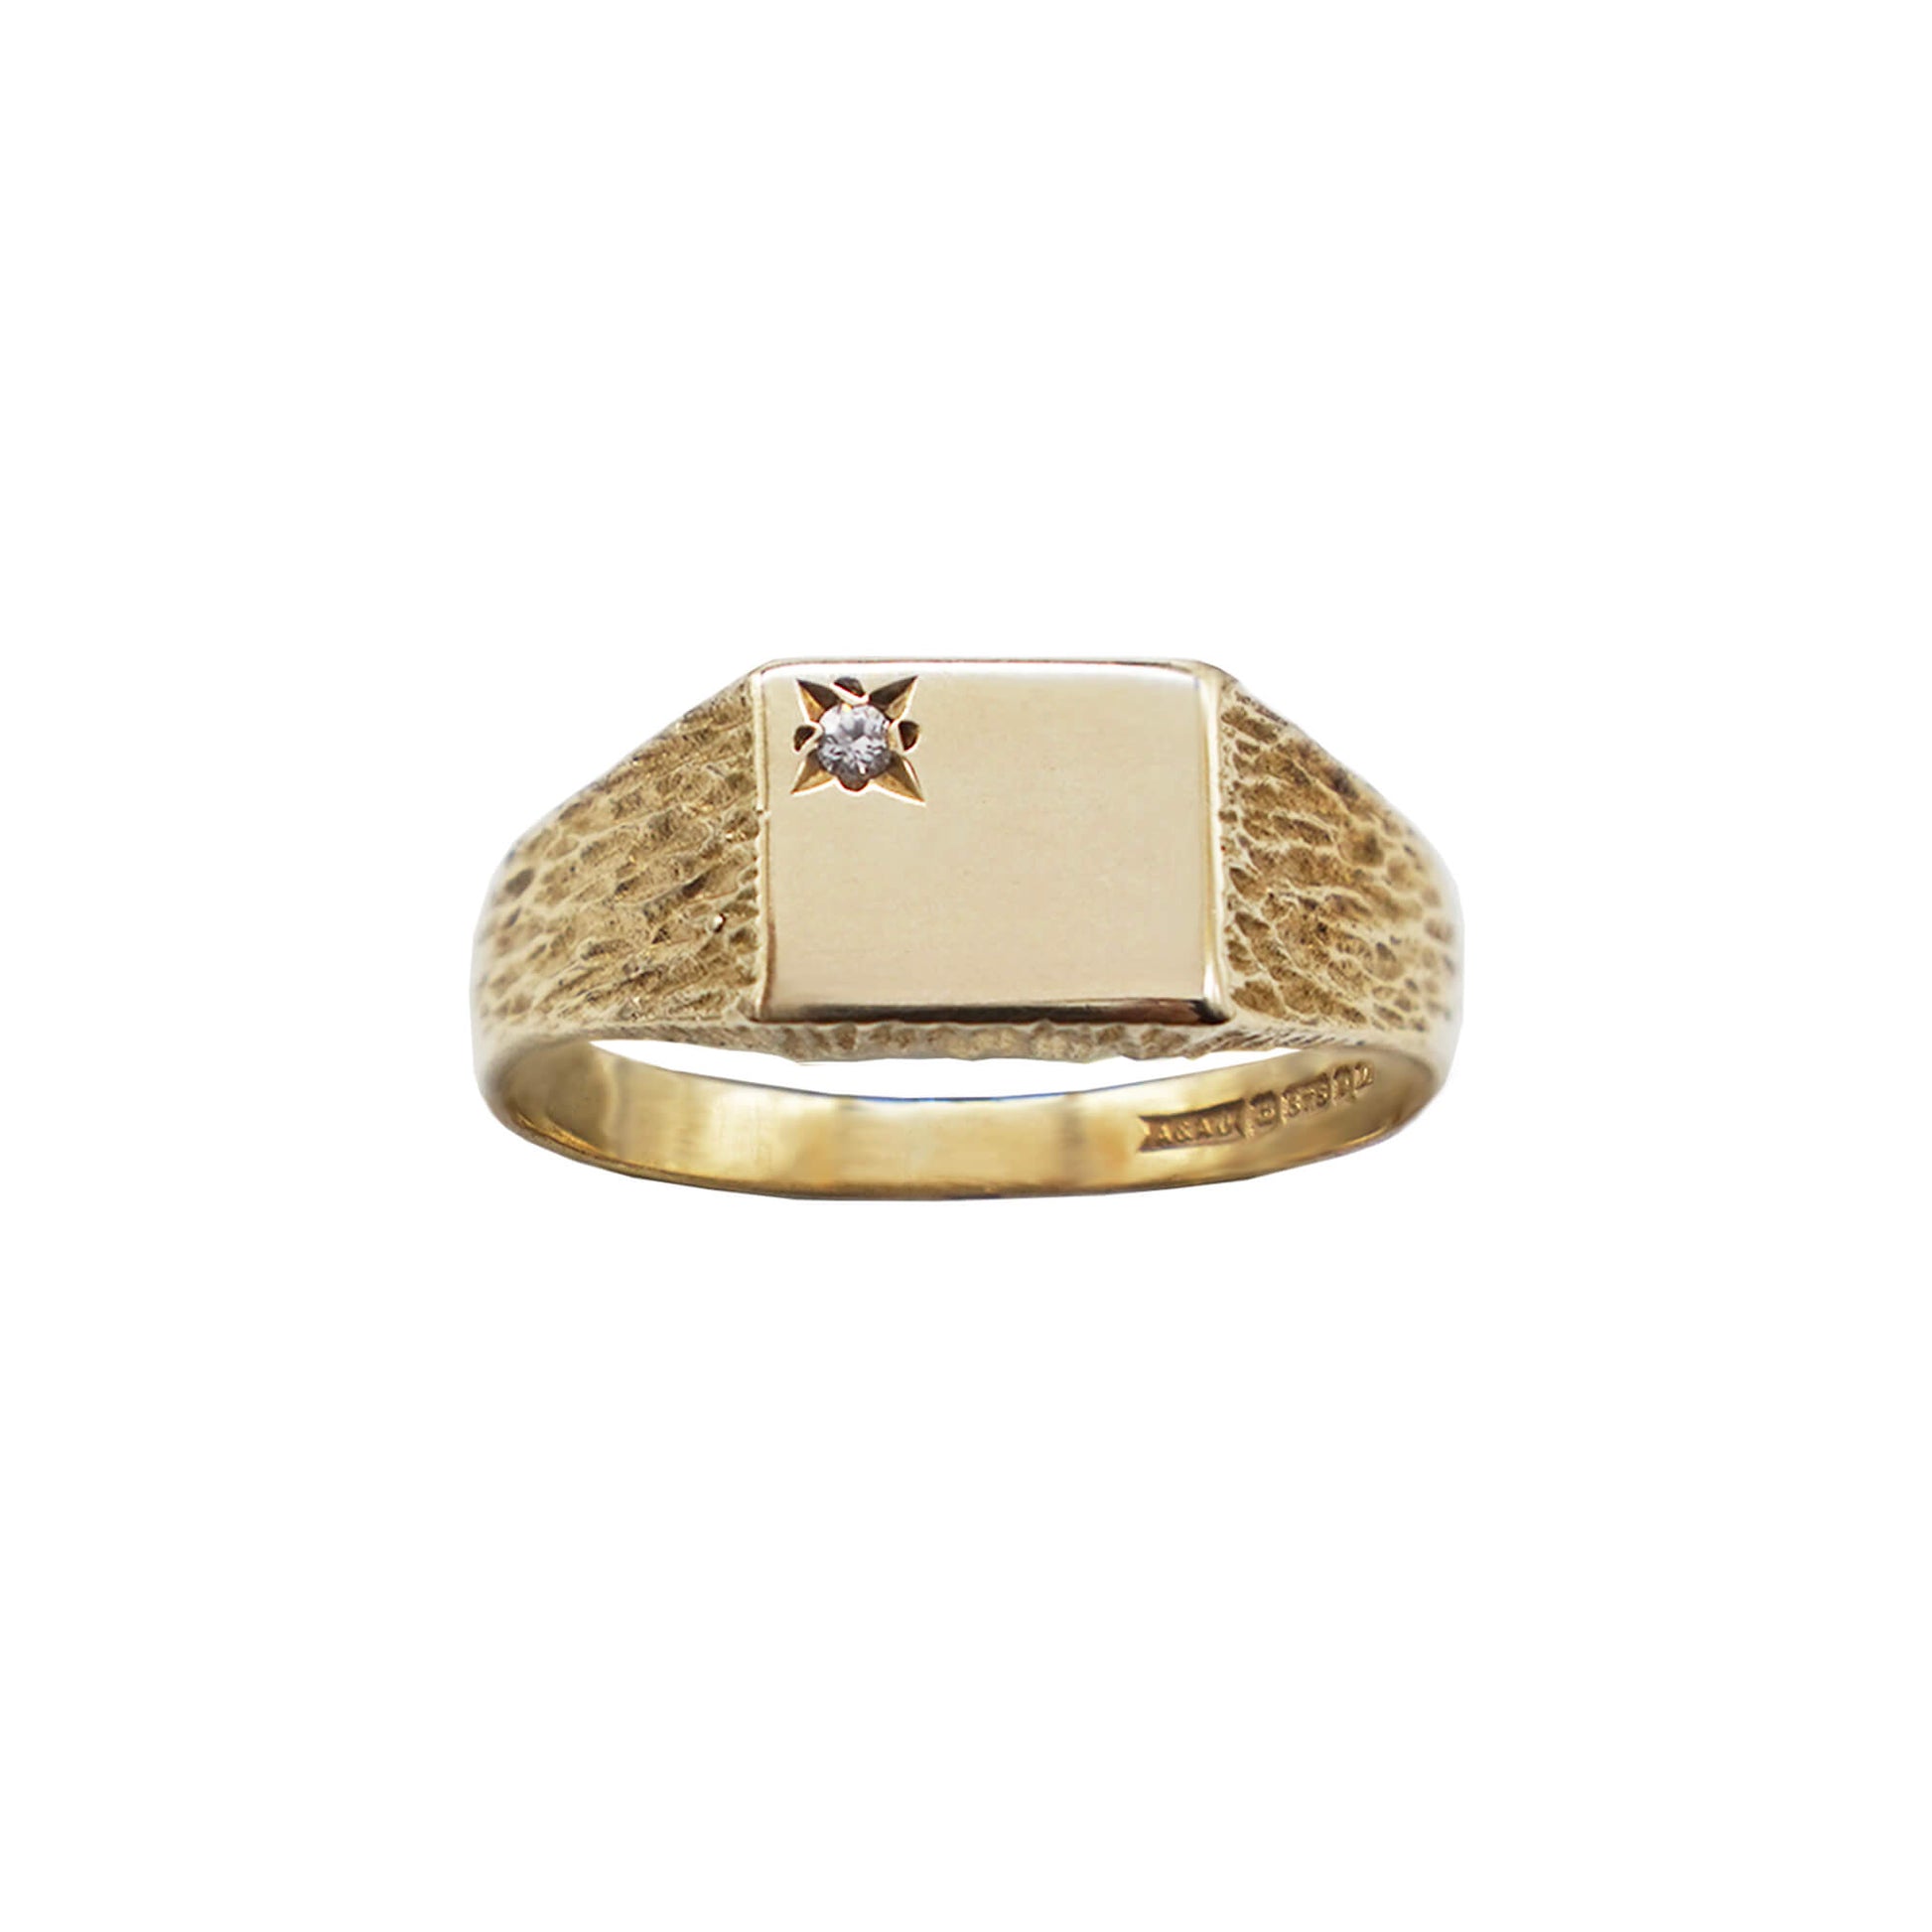  vintage 9k gold smooth rectangle face signet ring with corner starburst diamond stone, shank bark pattern, hallmarks visible on inner band.